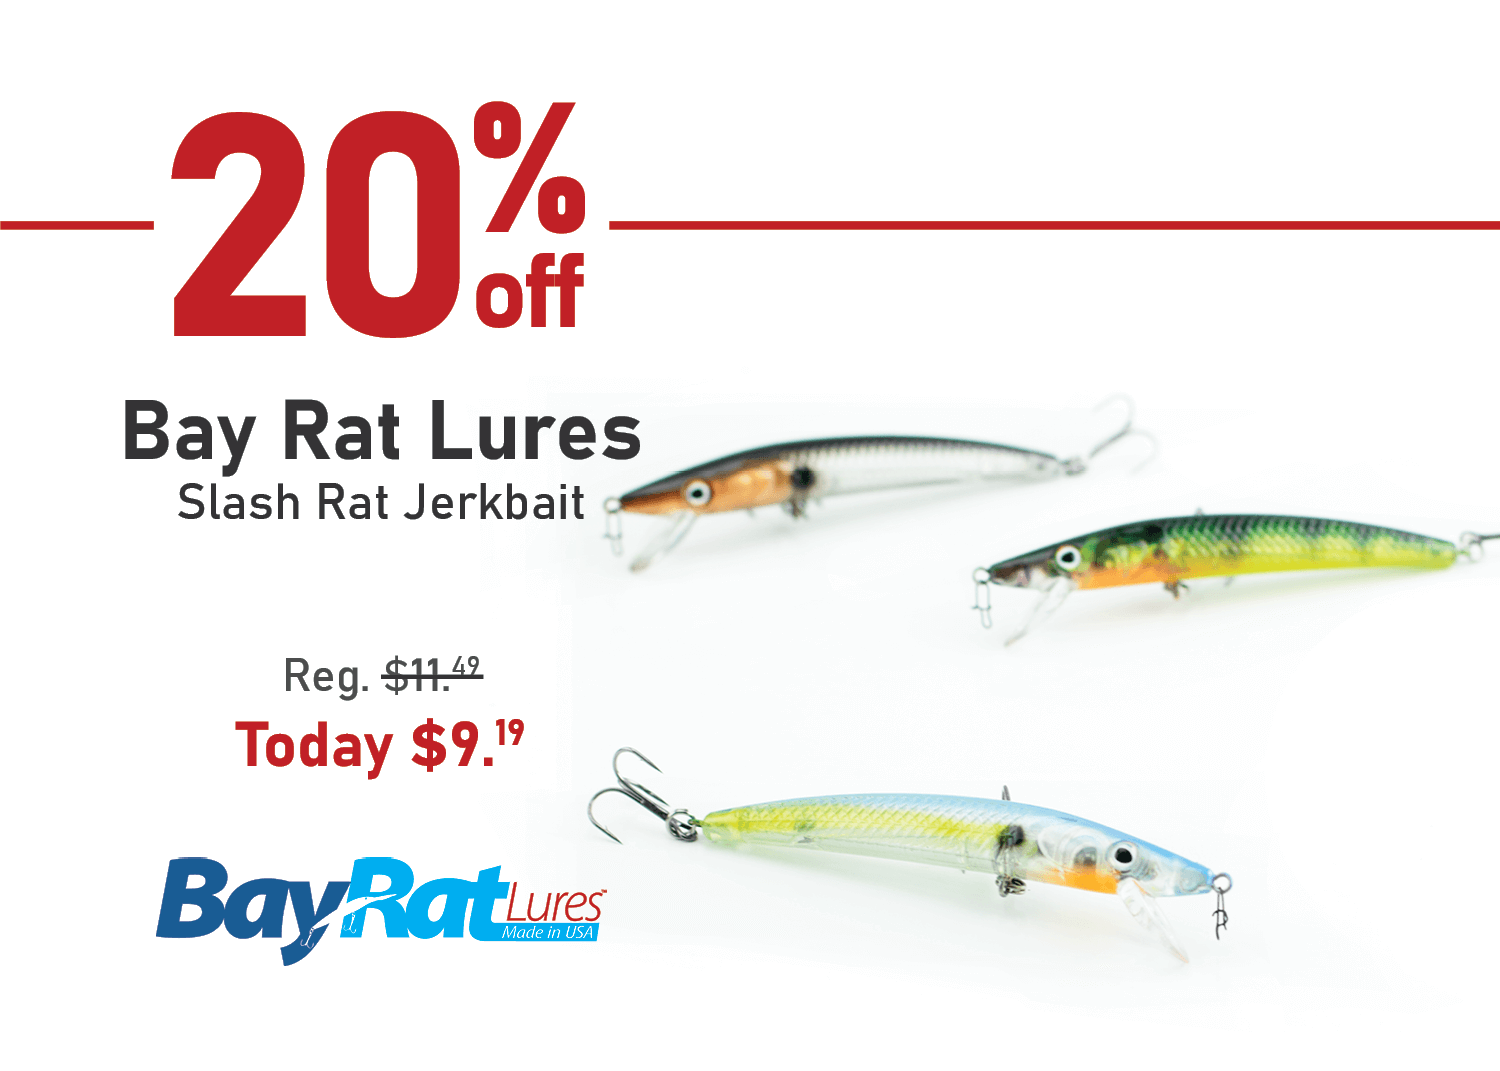 Save 20% on the Bay Rat Lures Slash Rat Jerkbait